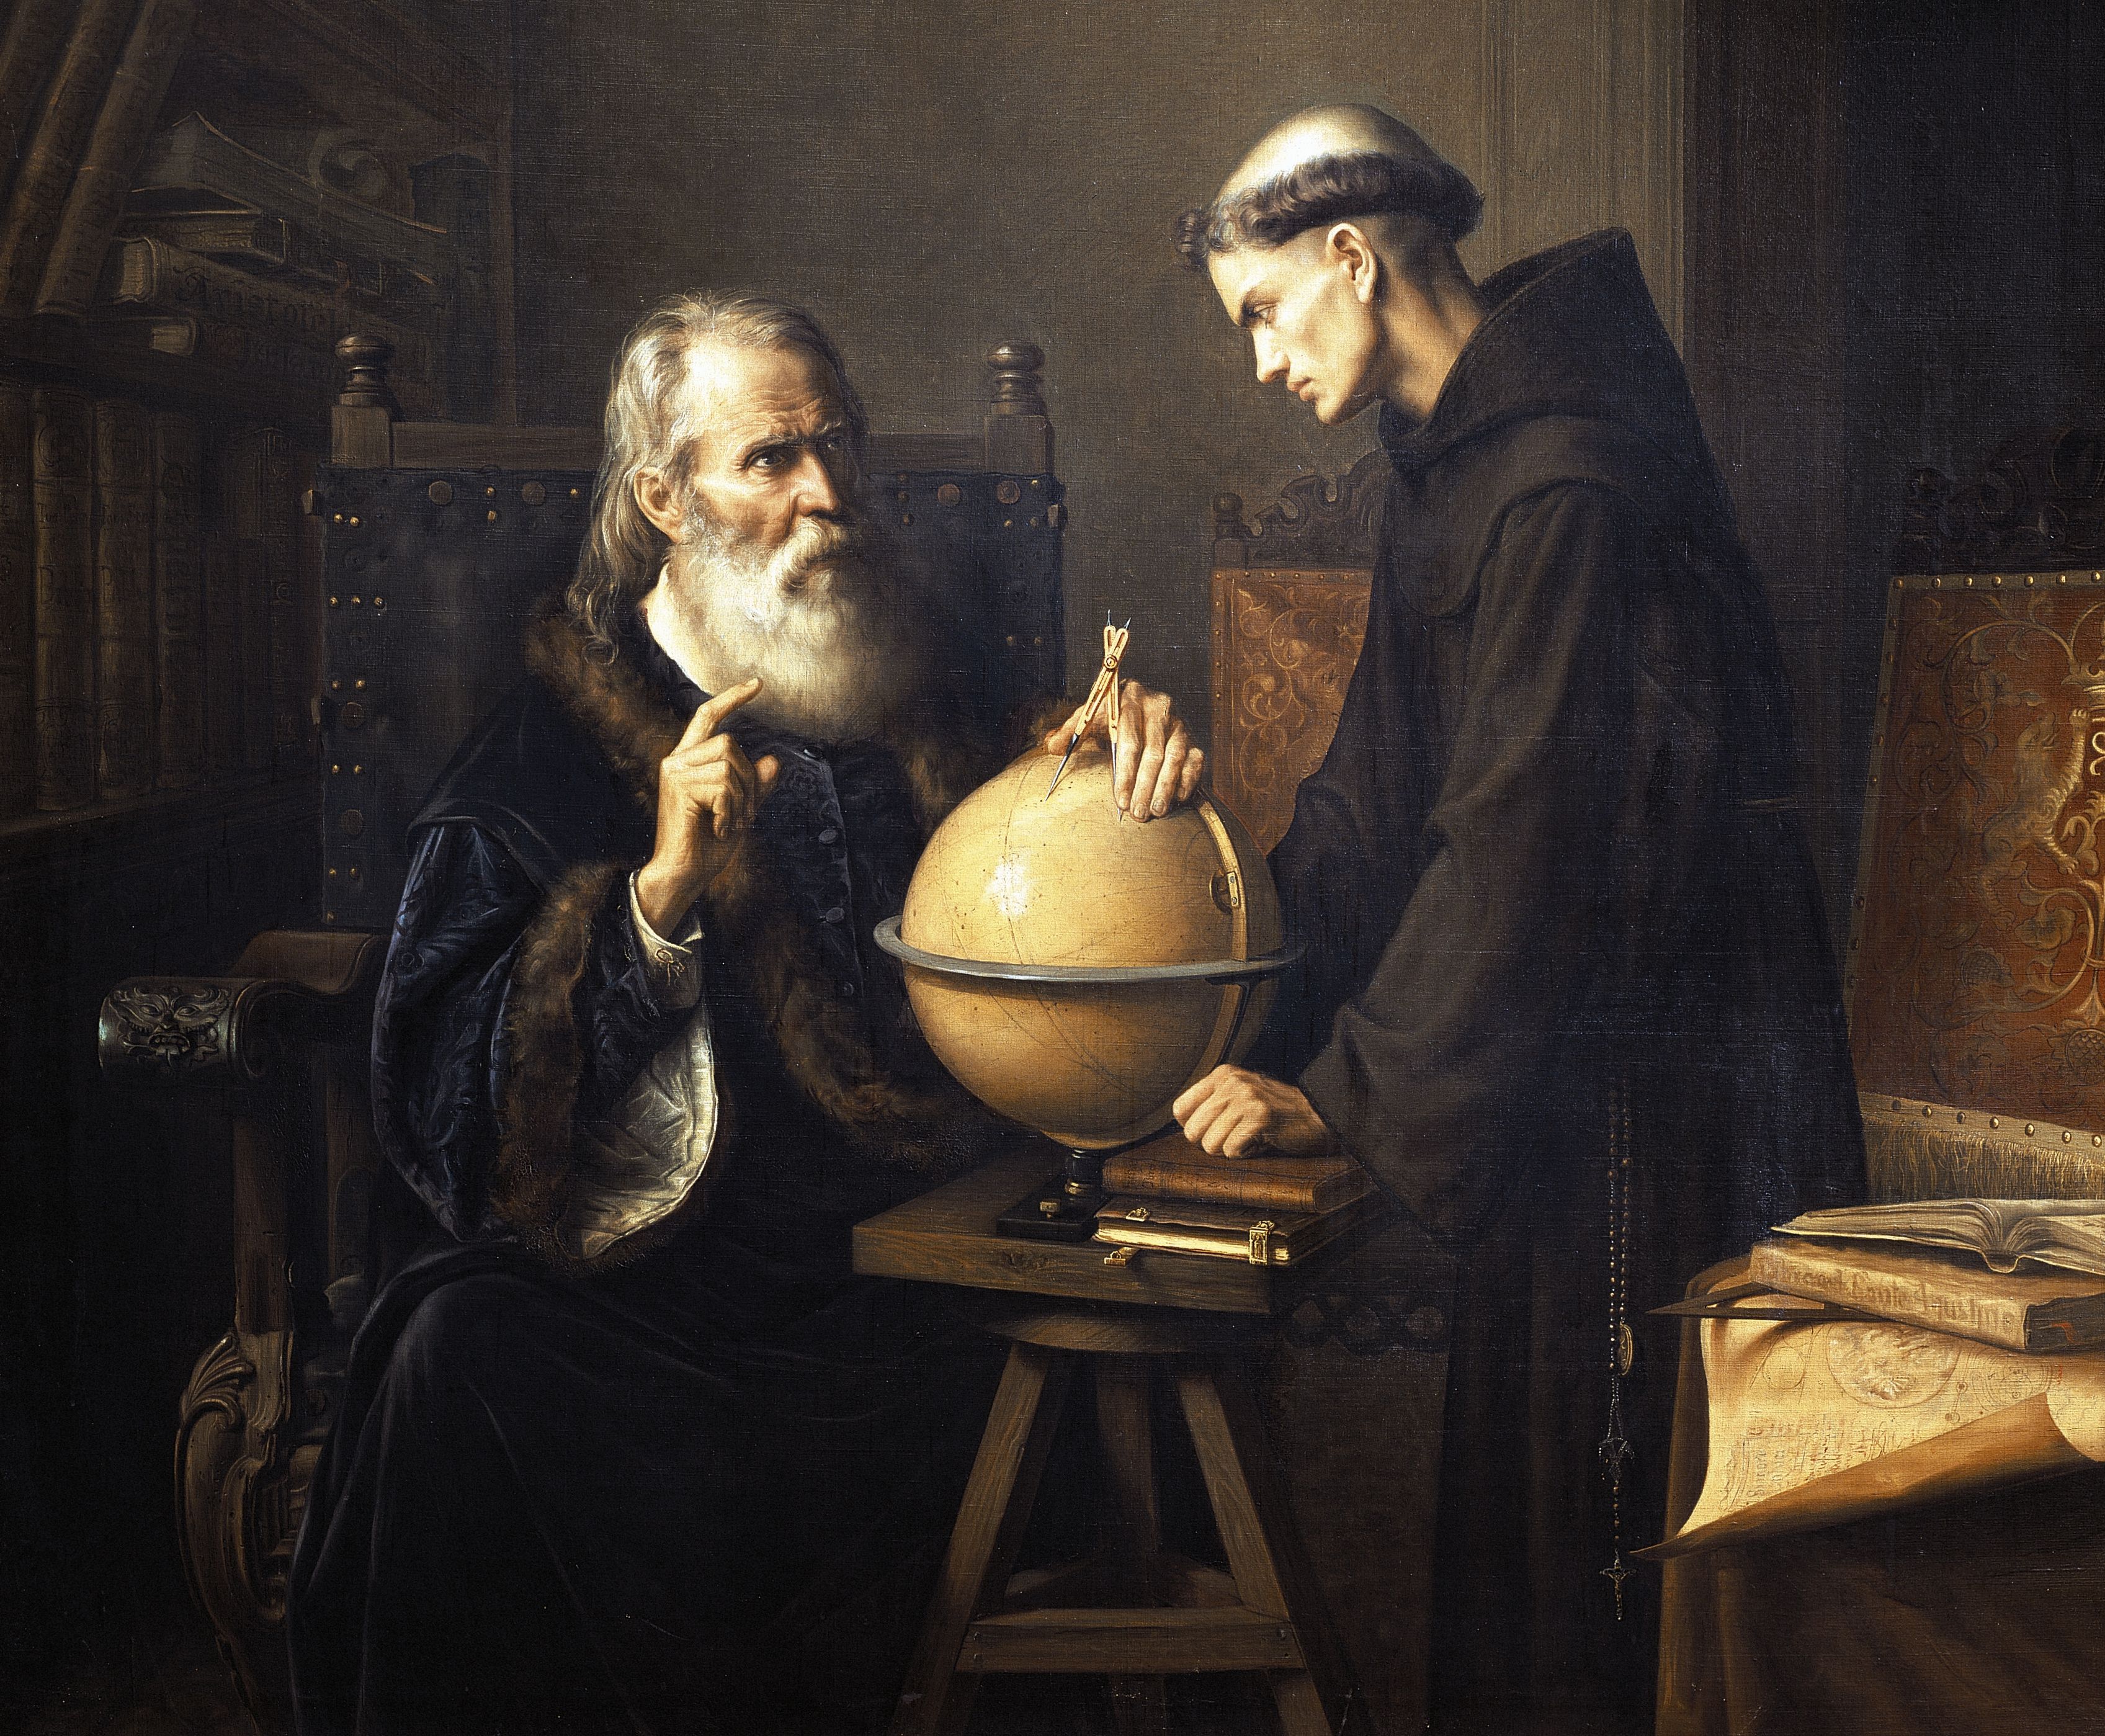 The Genius Quotes of Galileo Galilei